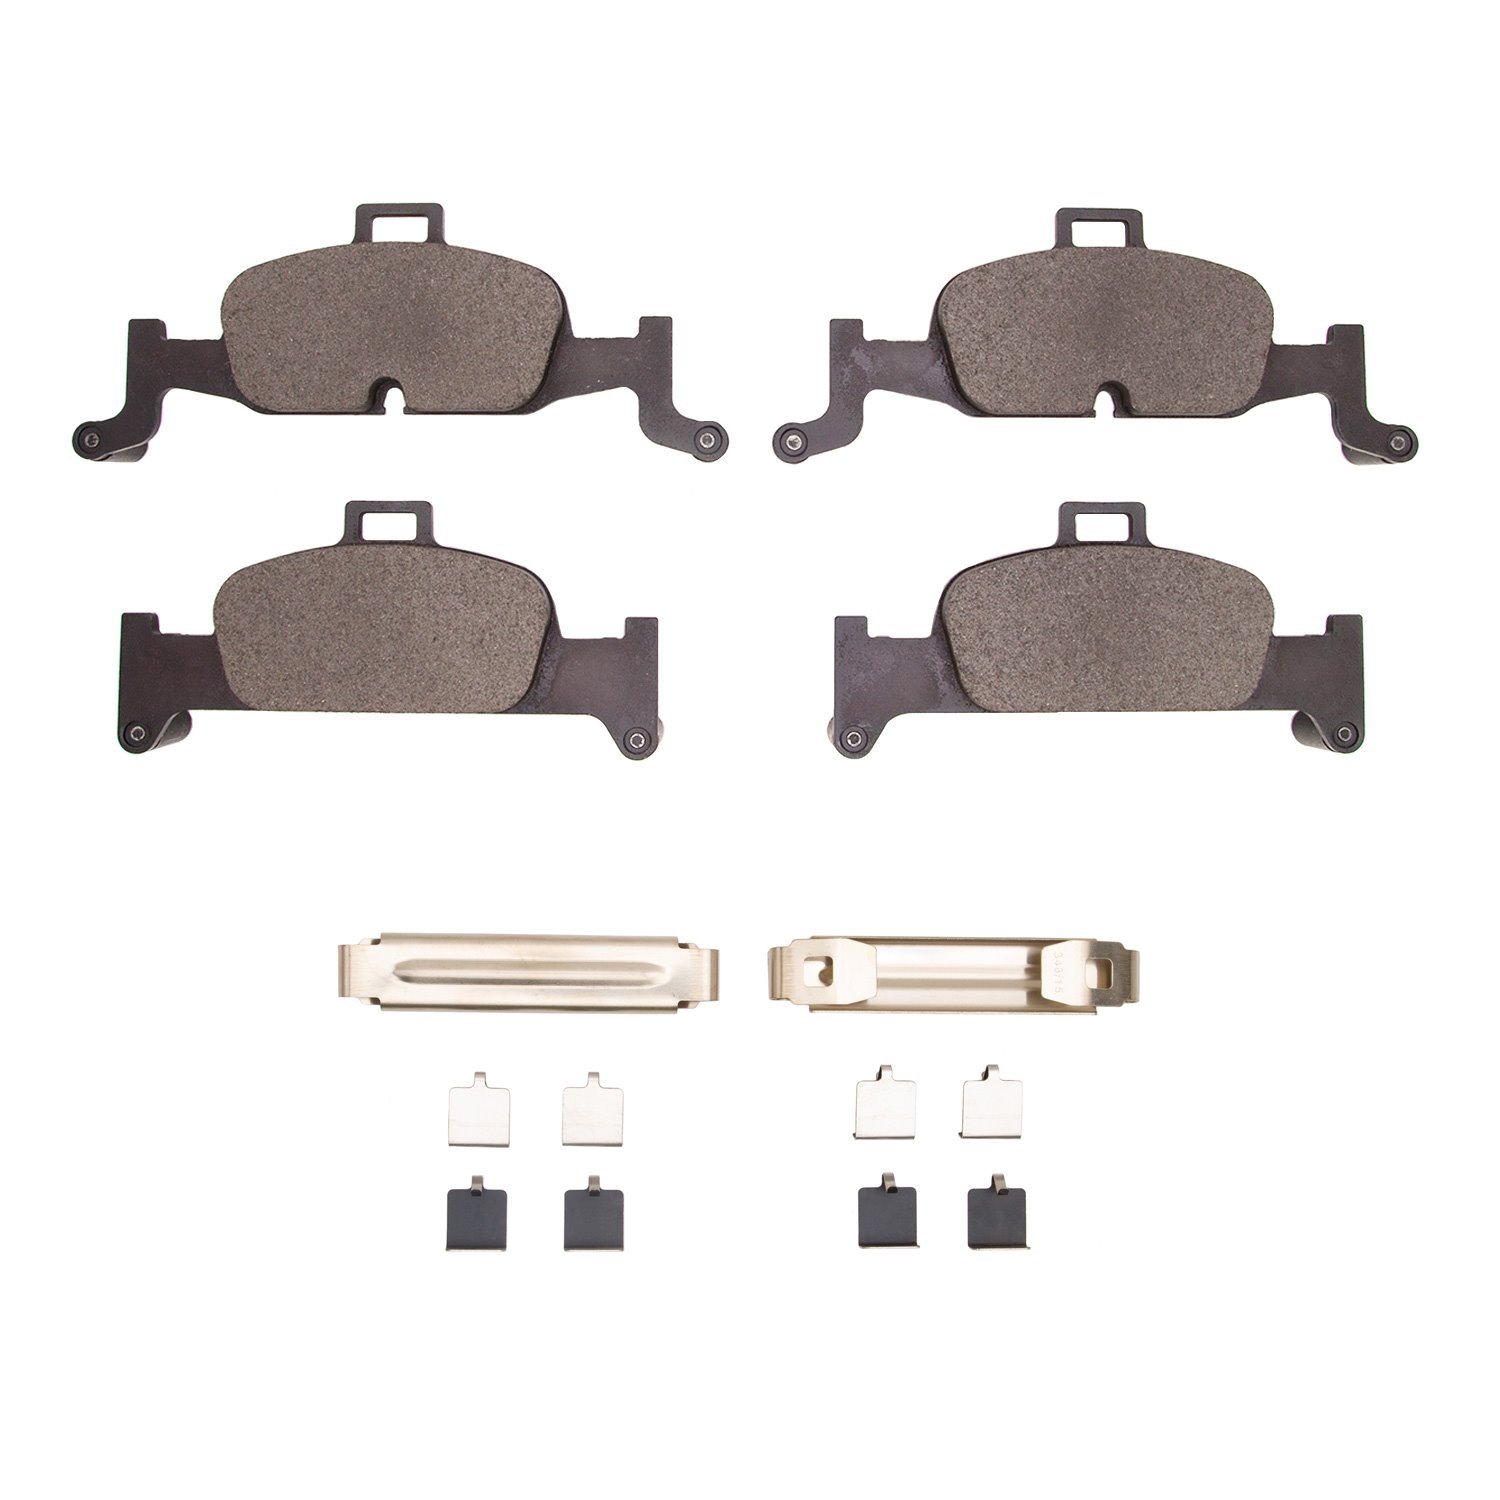 1552-1897-01 5000 Advanced Low-Metallic Brake Pads & Hardware Kit, Fits Select Audi/Volkswagen, Position: Front